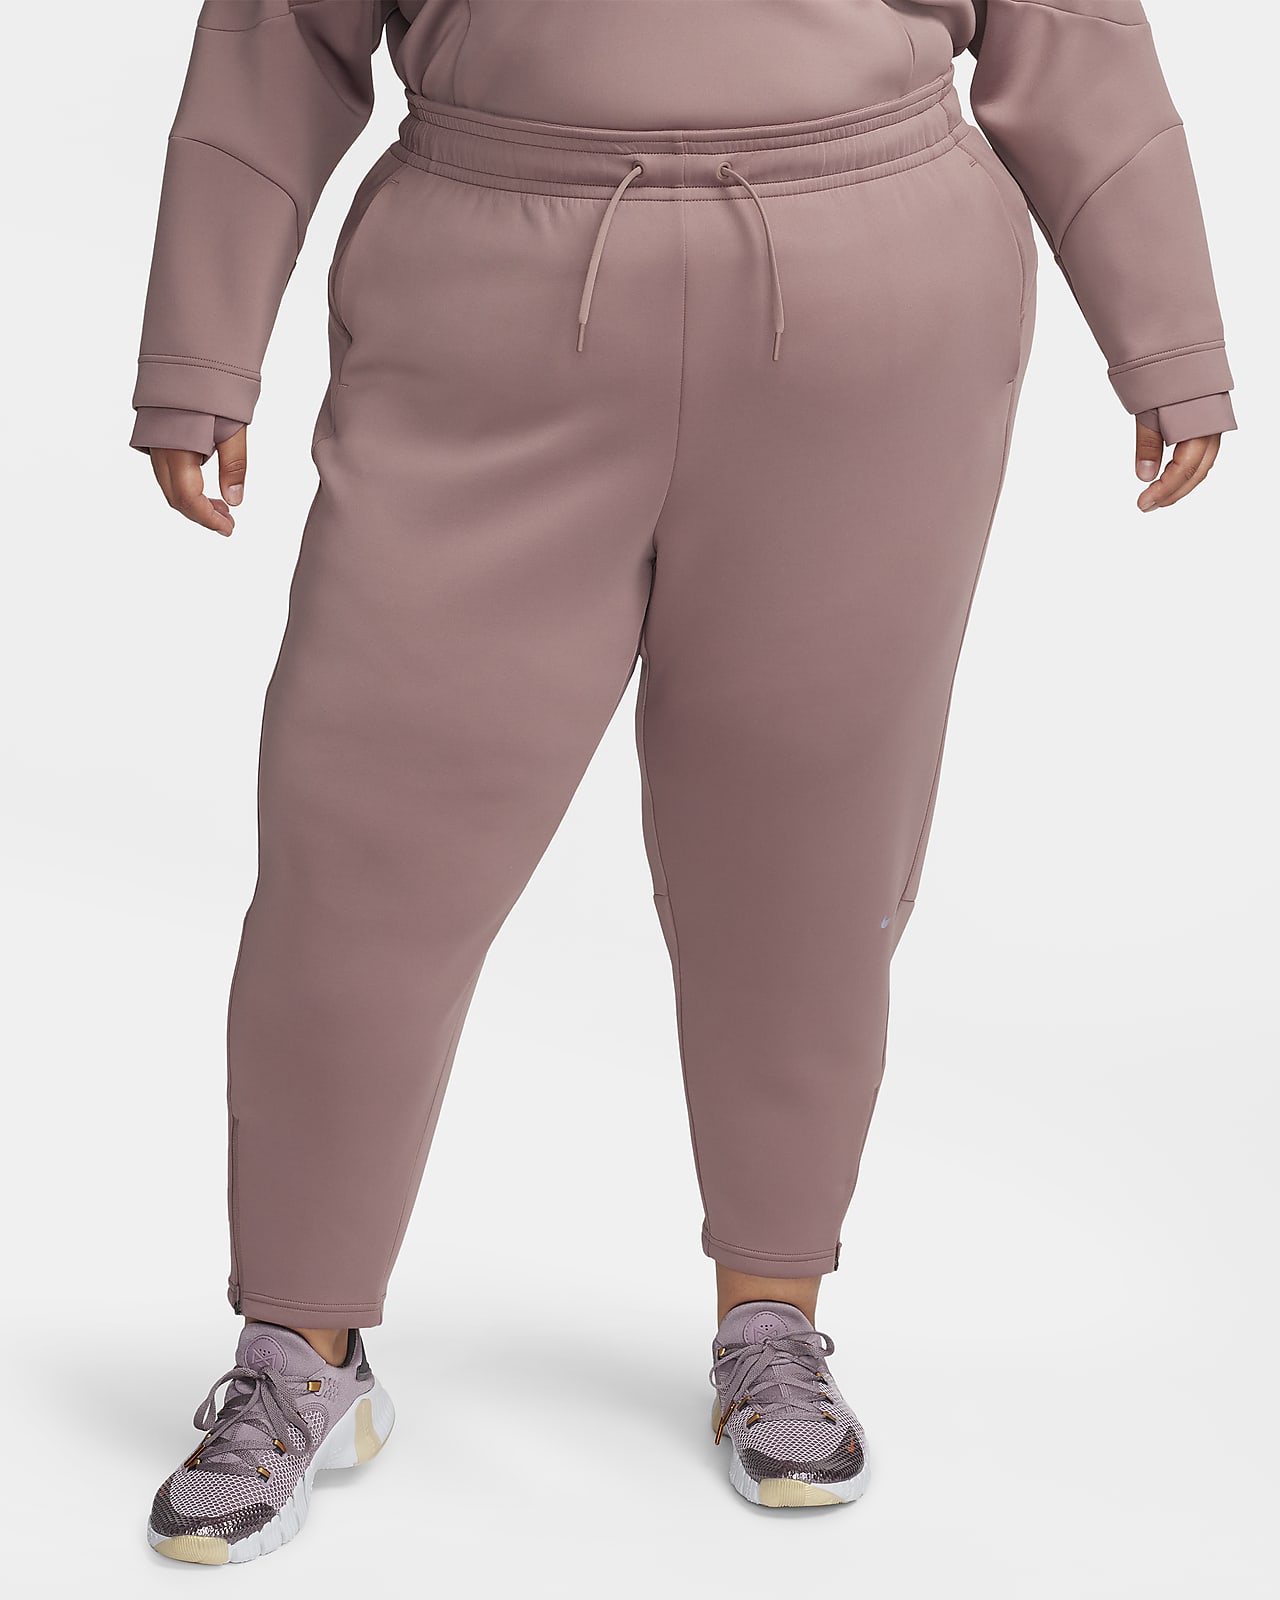 Nike Dri-FIT Prima Women's High-Waisted 7/8 Training Pants (Plus Size)